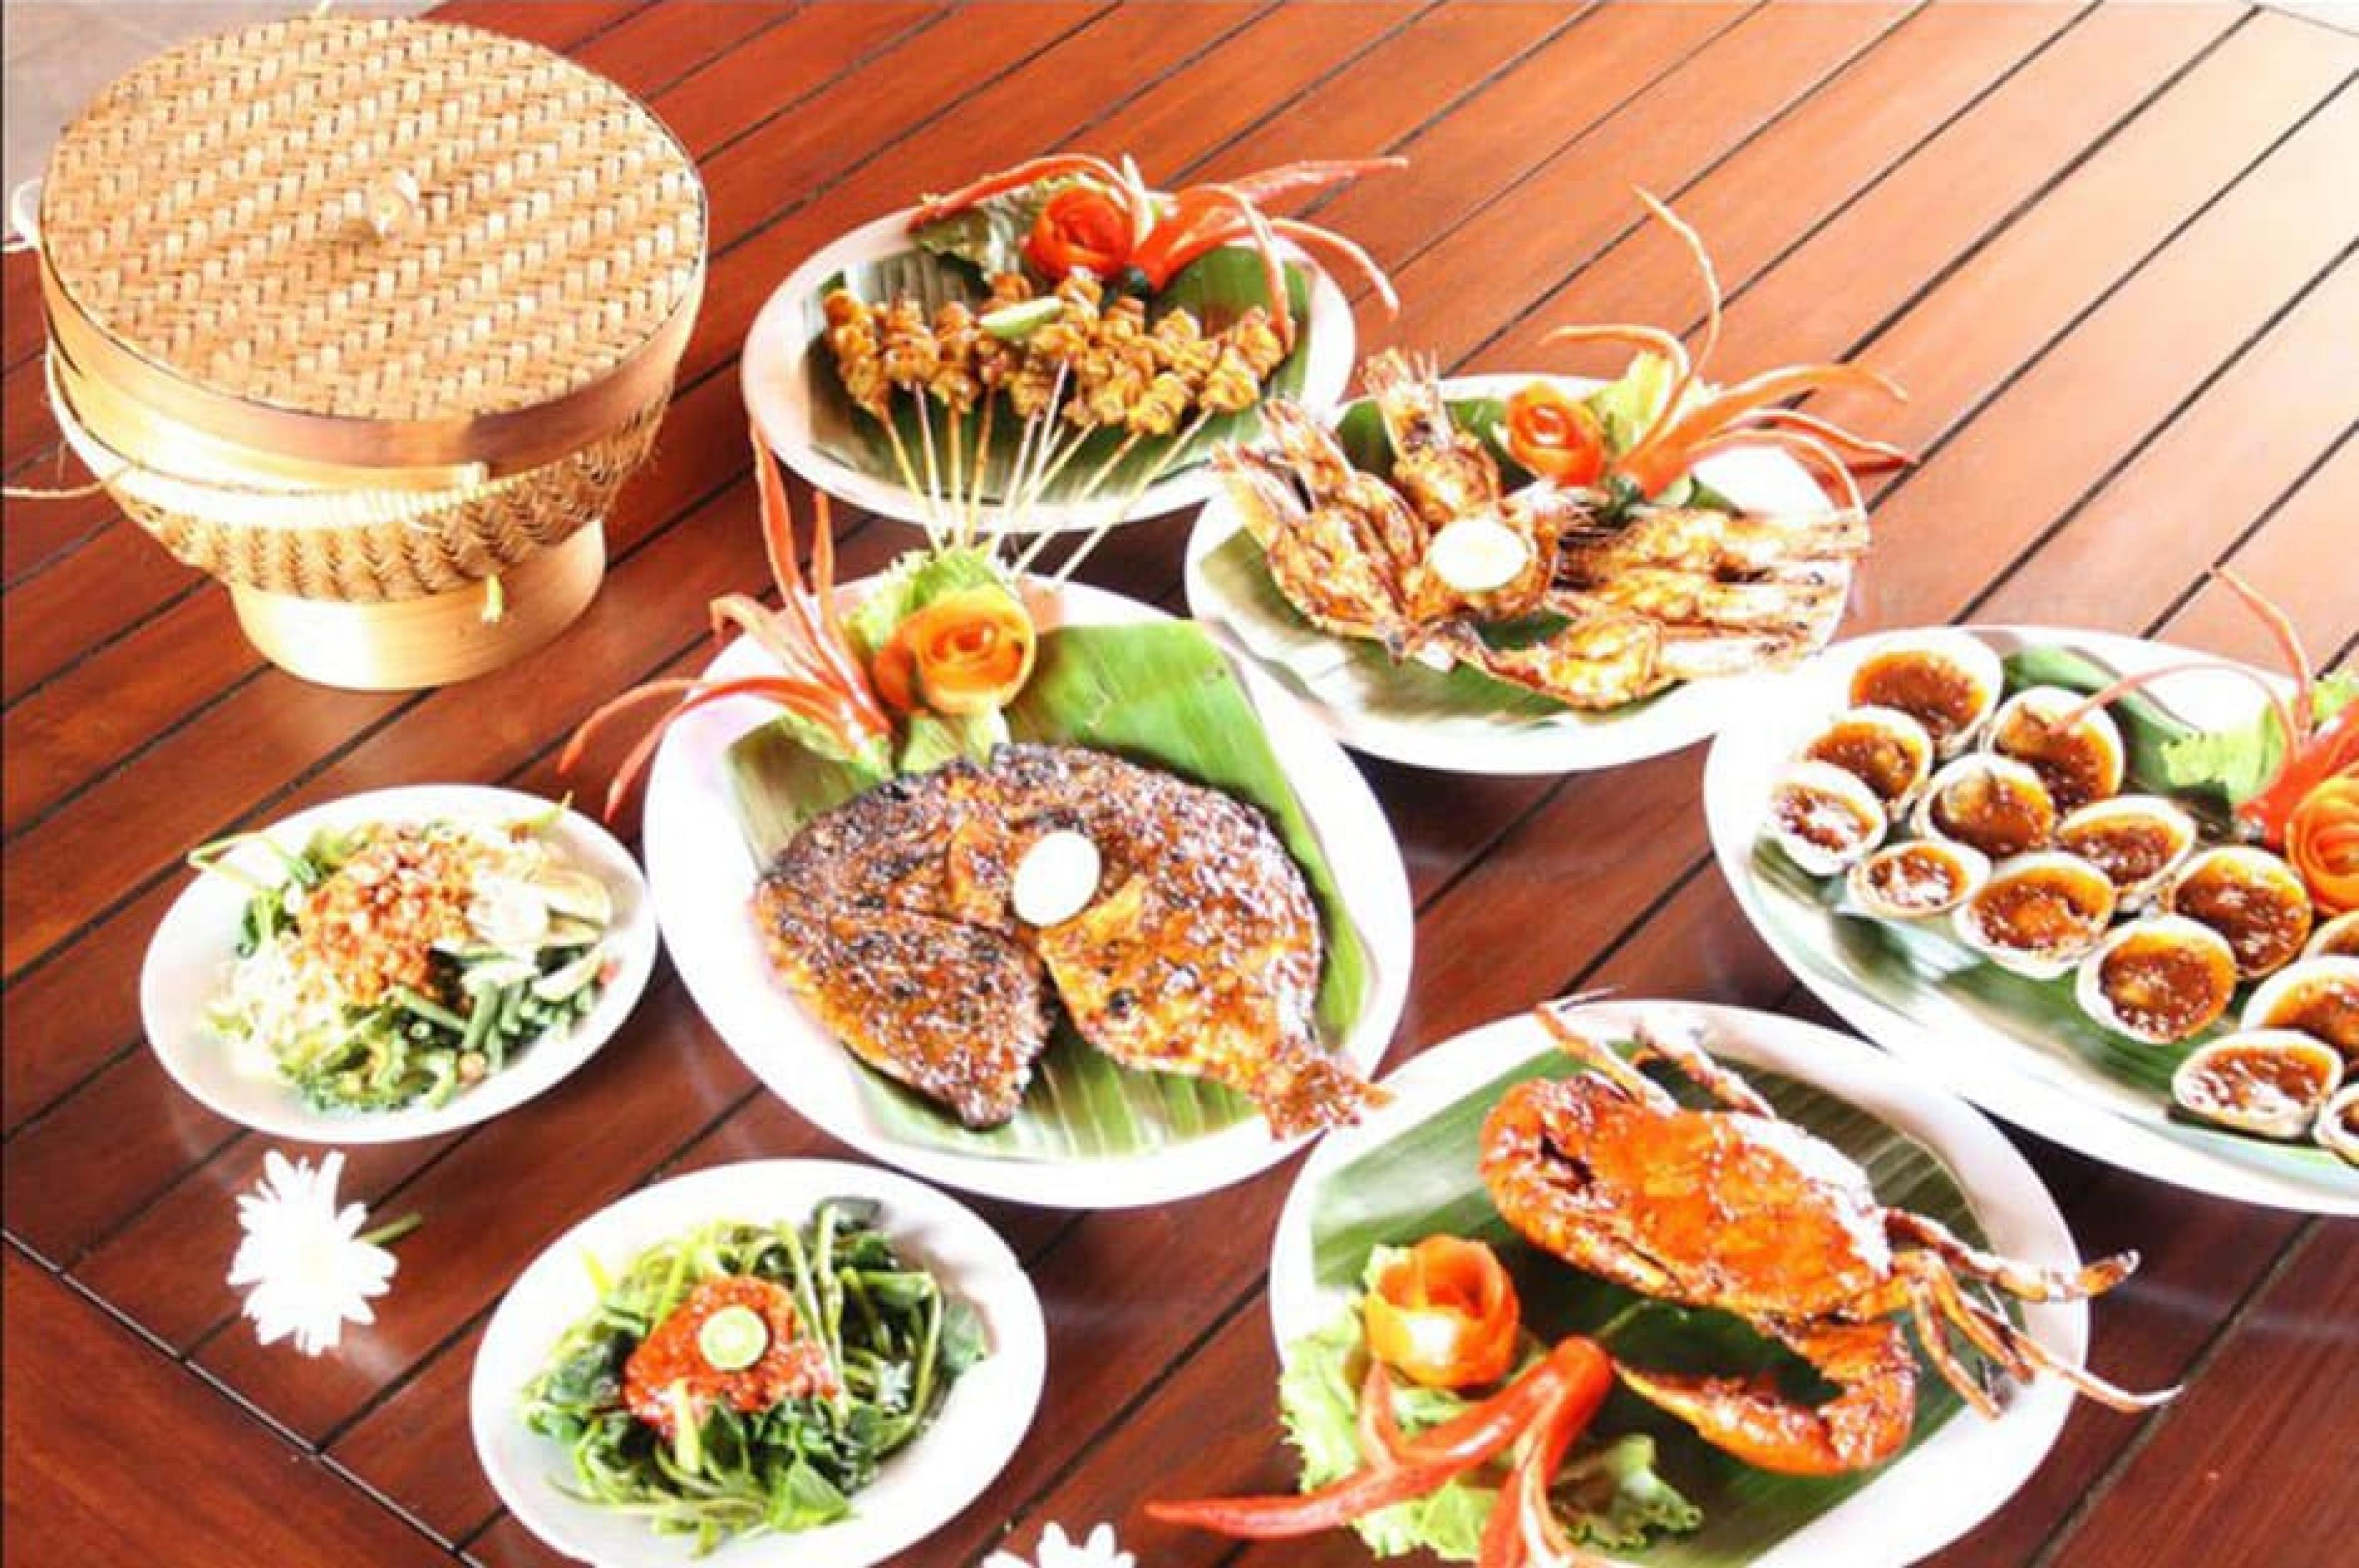 Food at Warung Enak, Bali, Indonesia